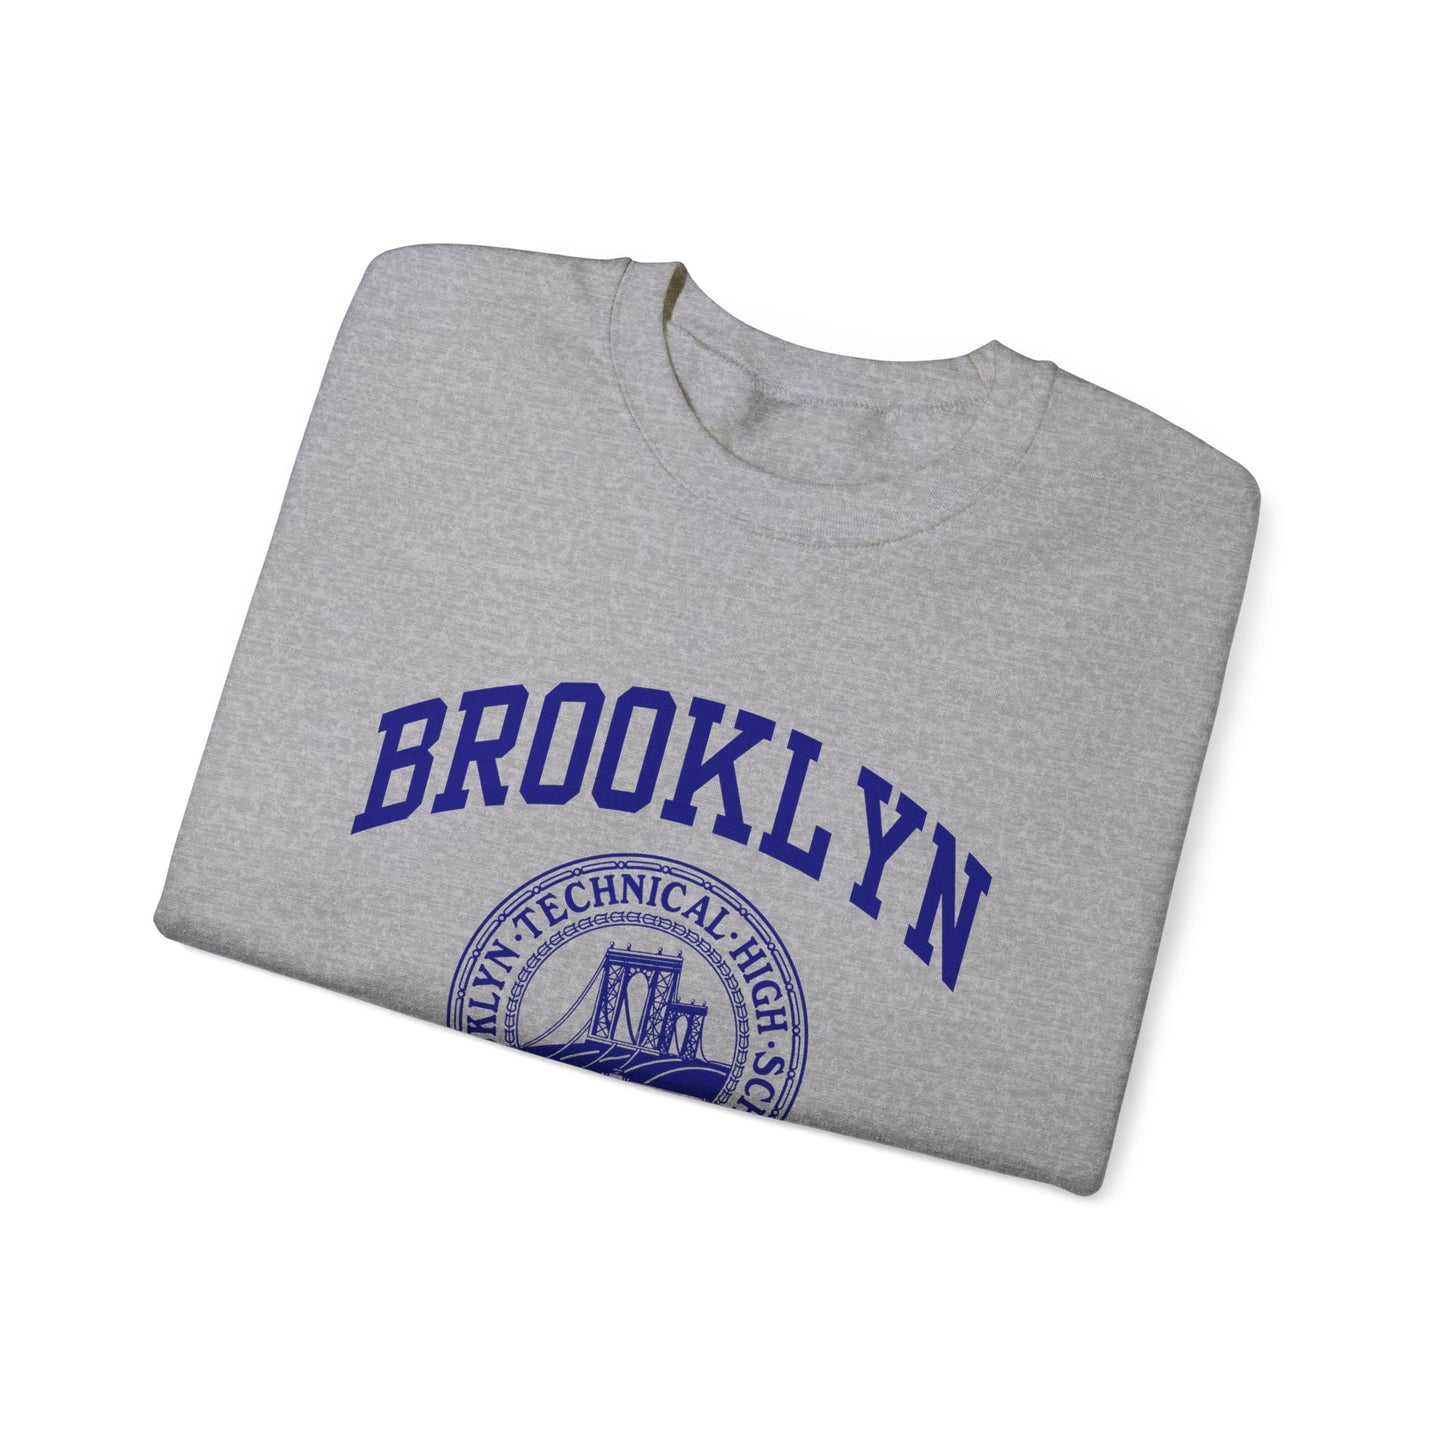 Classic Tech Seal With Brooklyn Tech - Men's Heavy Blend Crewneck Sweatshirt